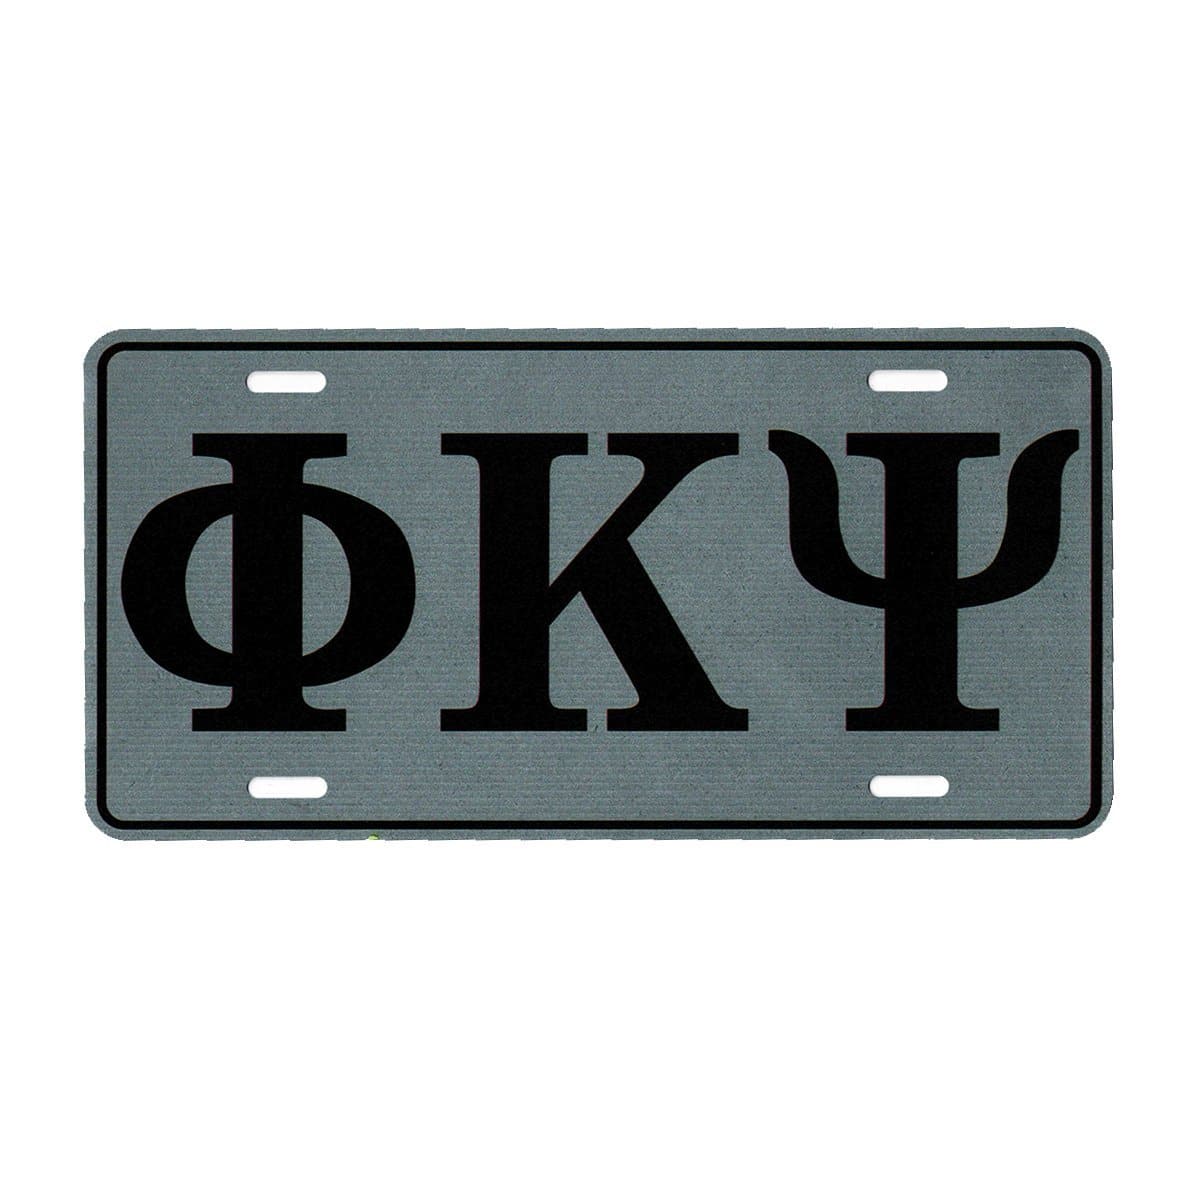 Phi Psi License Plate | Phi Kappa Psi | Car accessories > Decorative license plates